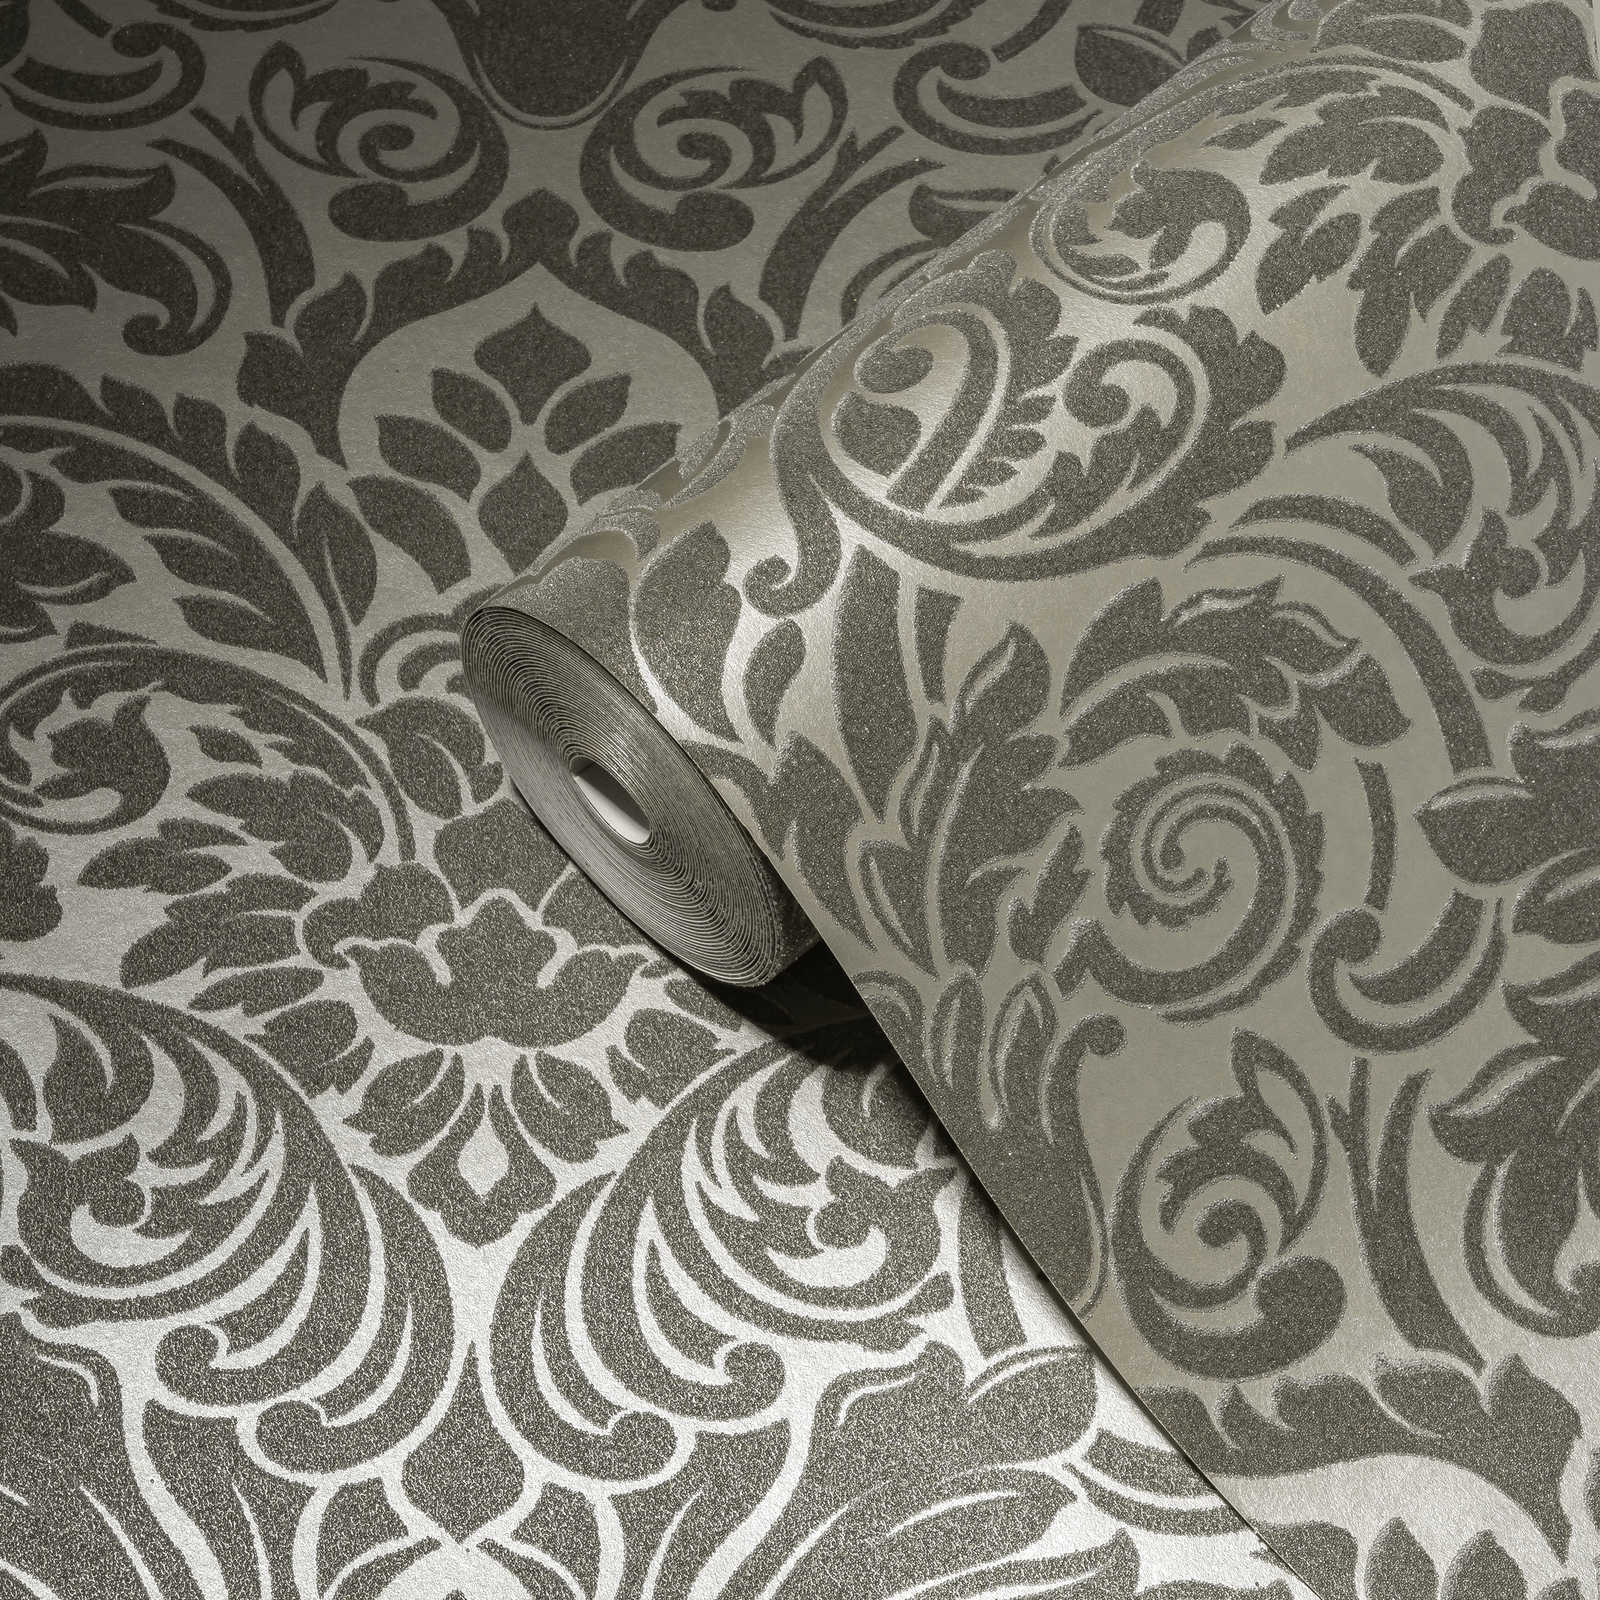             Ornament wallpaper metallic effect & floral design - silver, grey
        